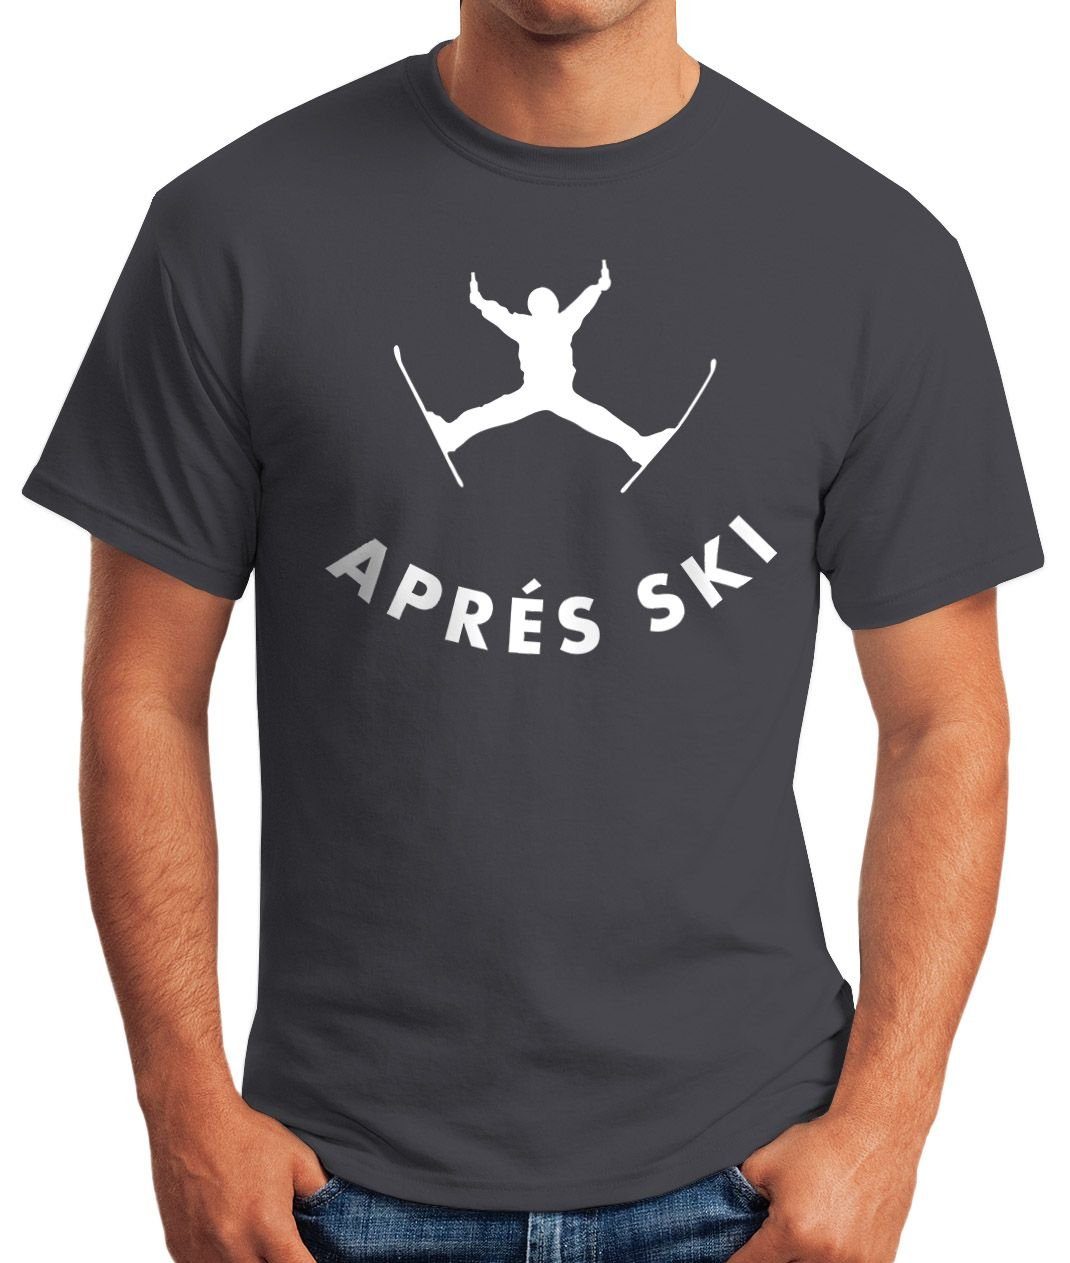 Sprung MoonWorks Bier T-Shirt grau Fun-Shirt Print mit Herren Moonworks® Print-Shirt Apres Ski